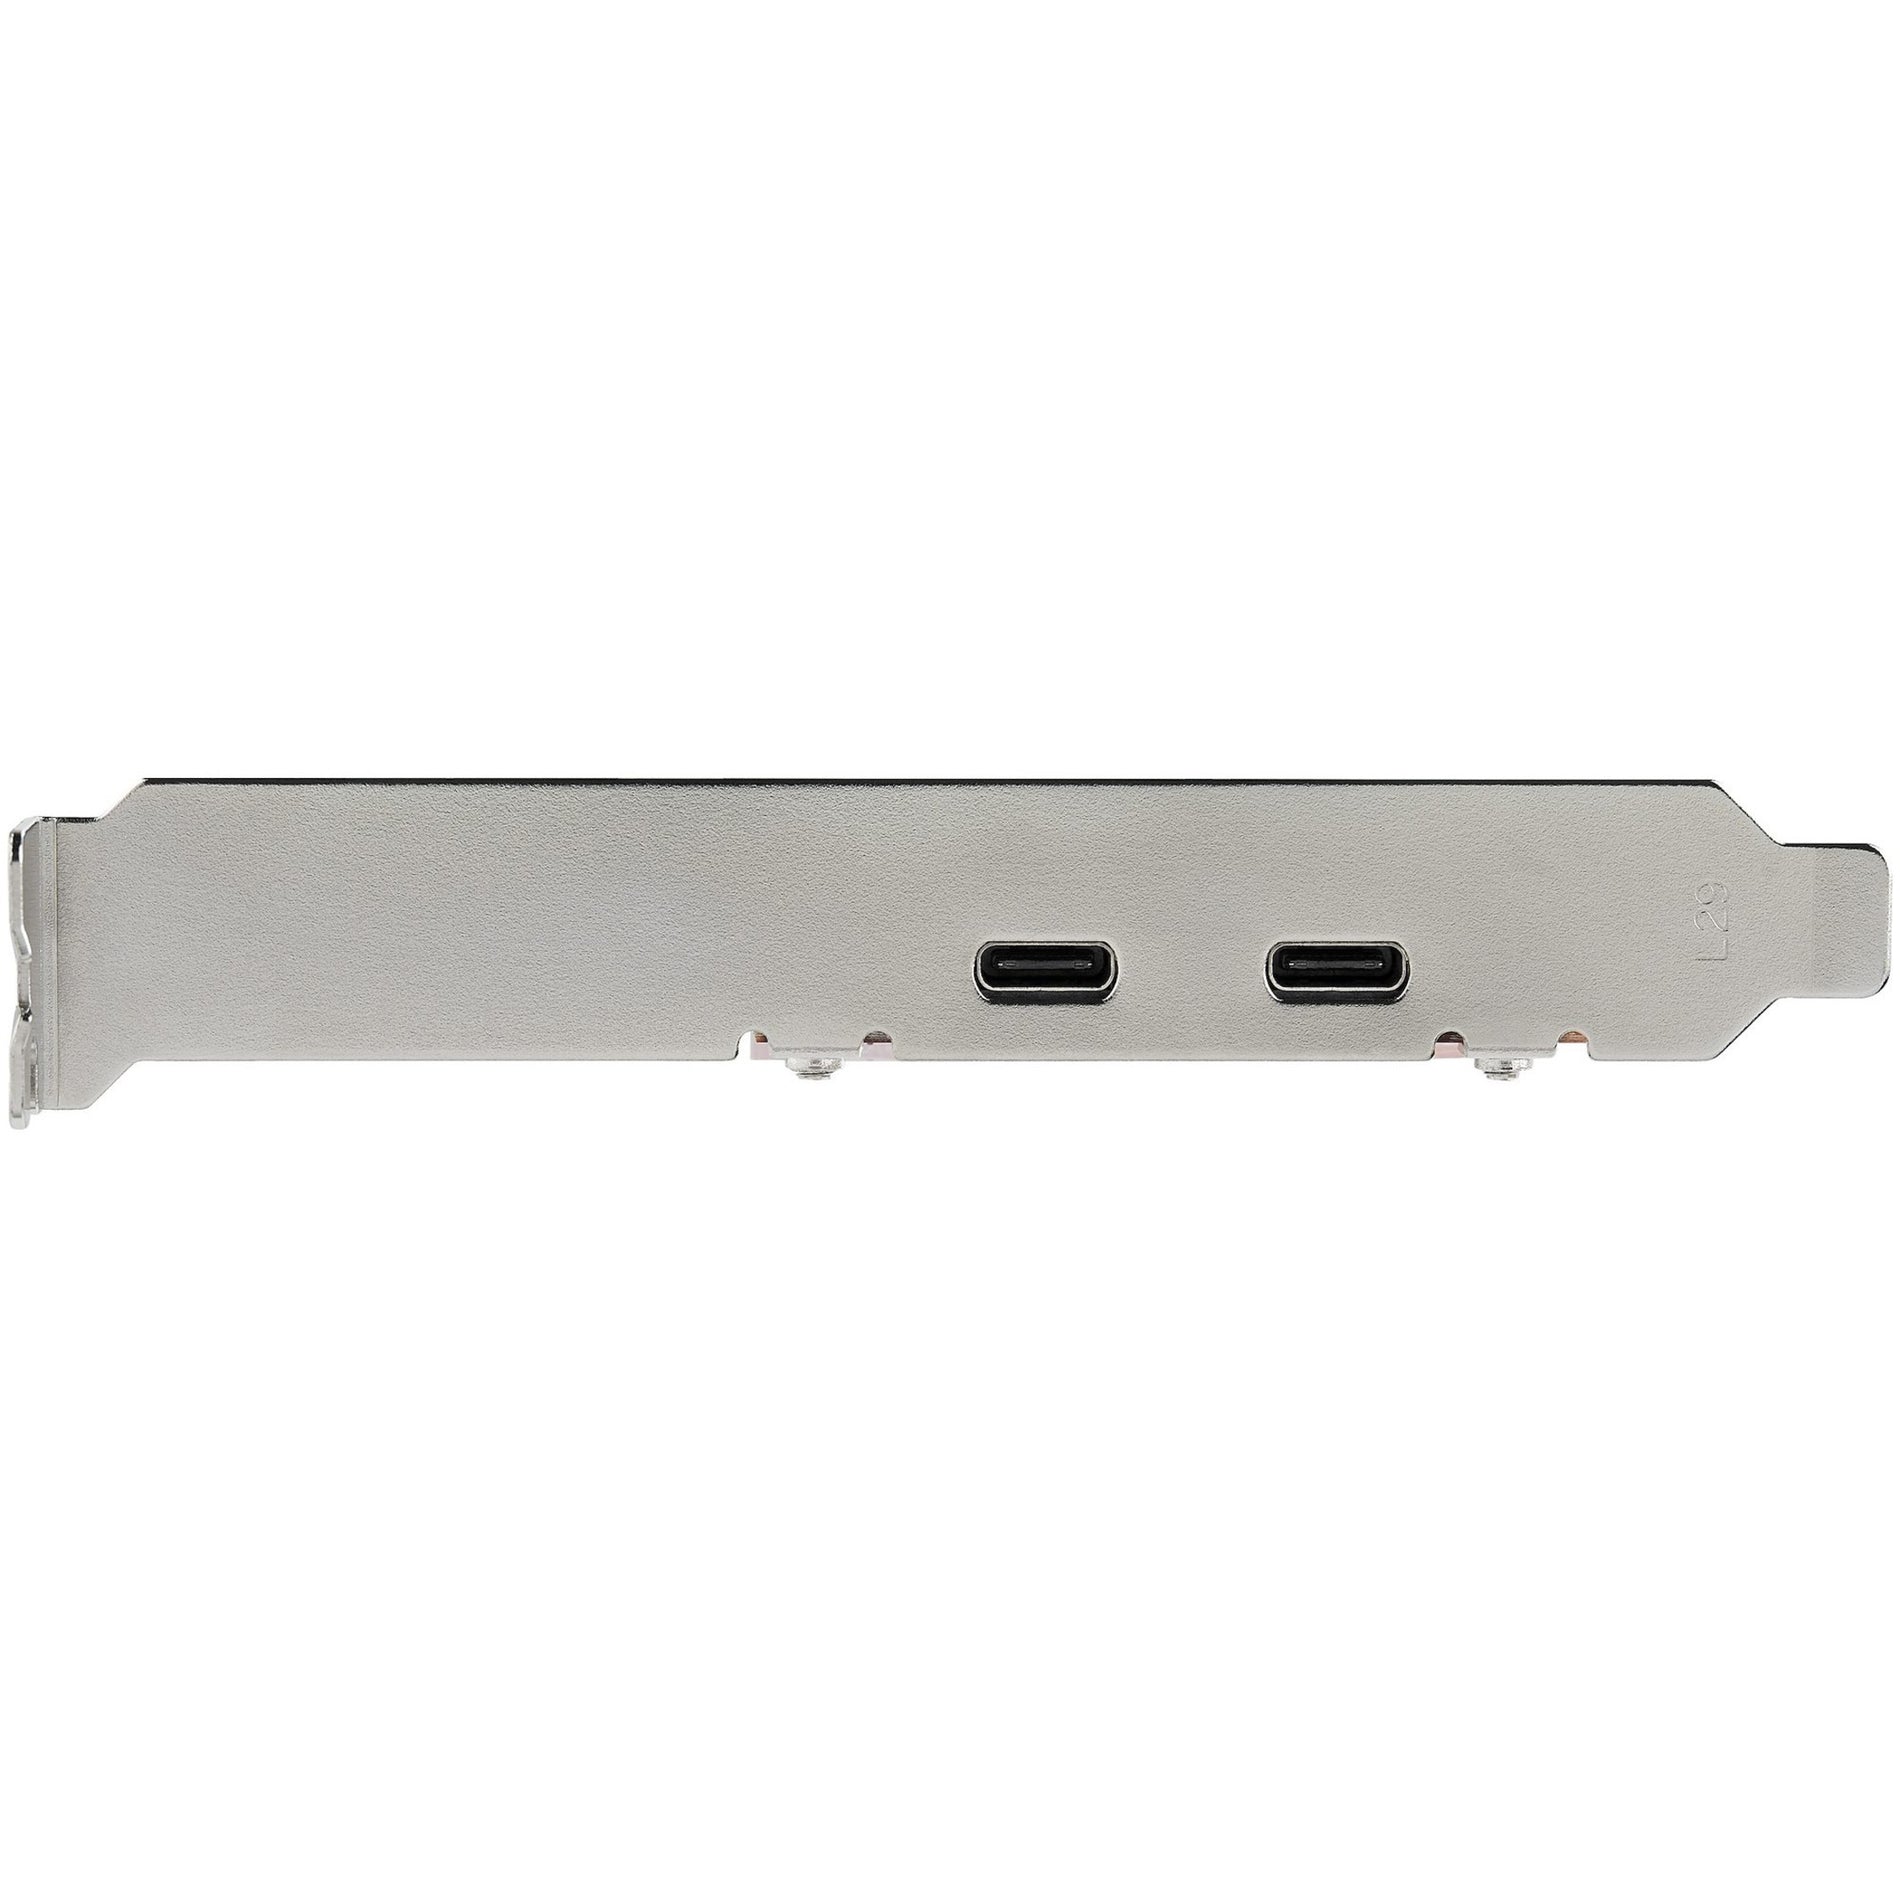 StarTech.com PEXUSB312C3 PCIe USB 3.1 Card - 2x USB C 3.1 Gen 2 10Gbps, USB Type C PCI Express Card